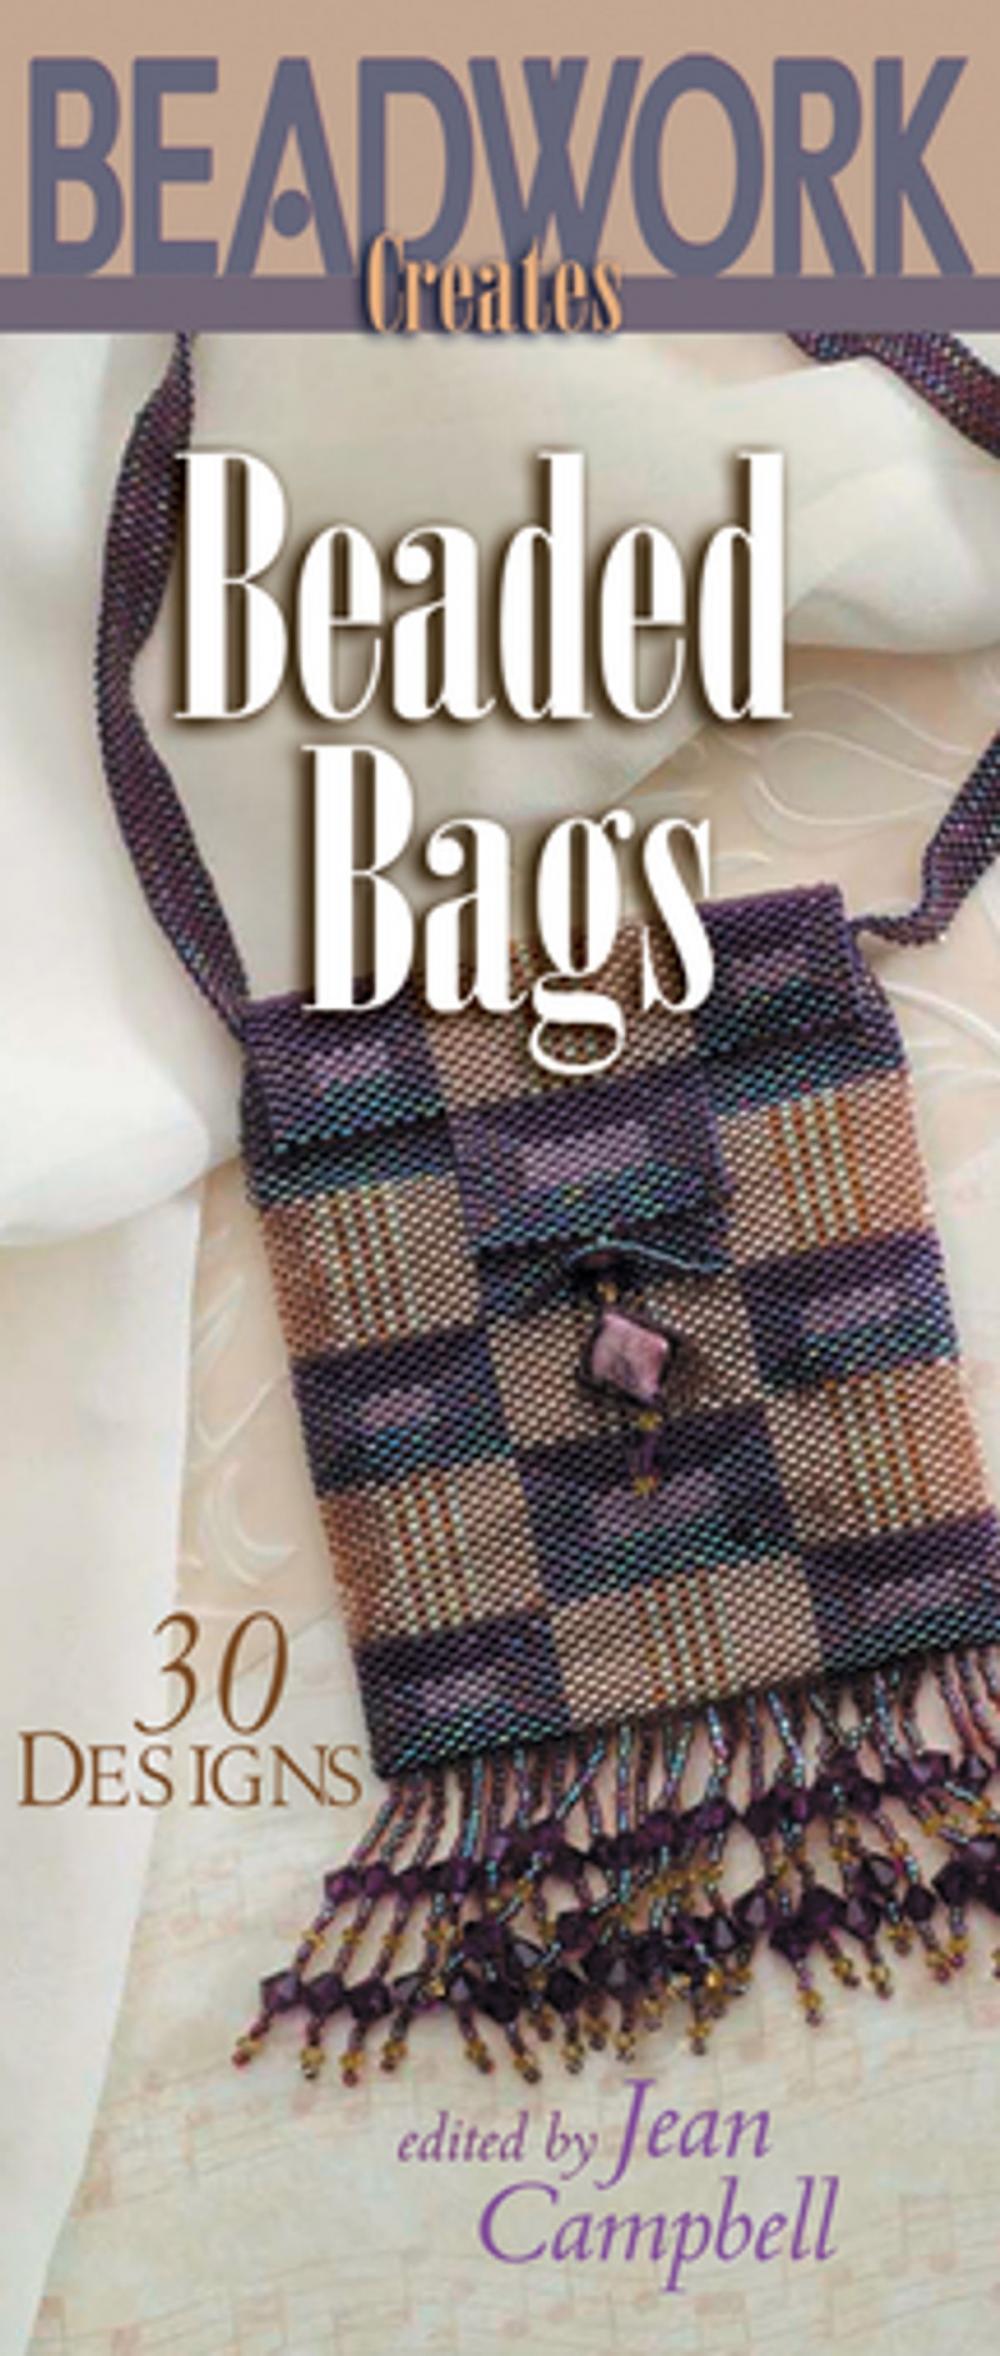 Big bigCover of Beadwork Creates Beaded Bags